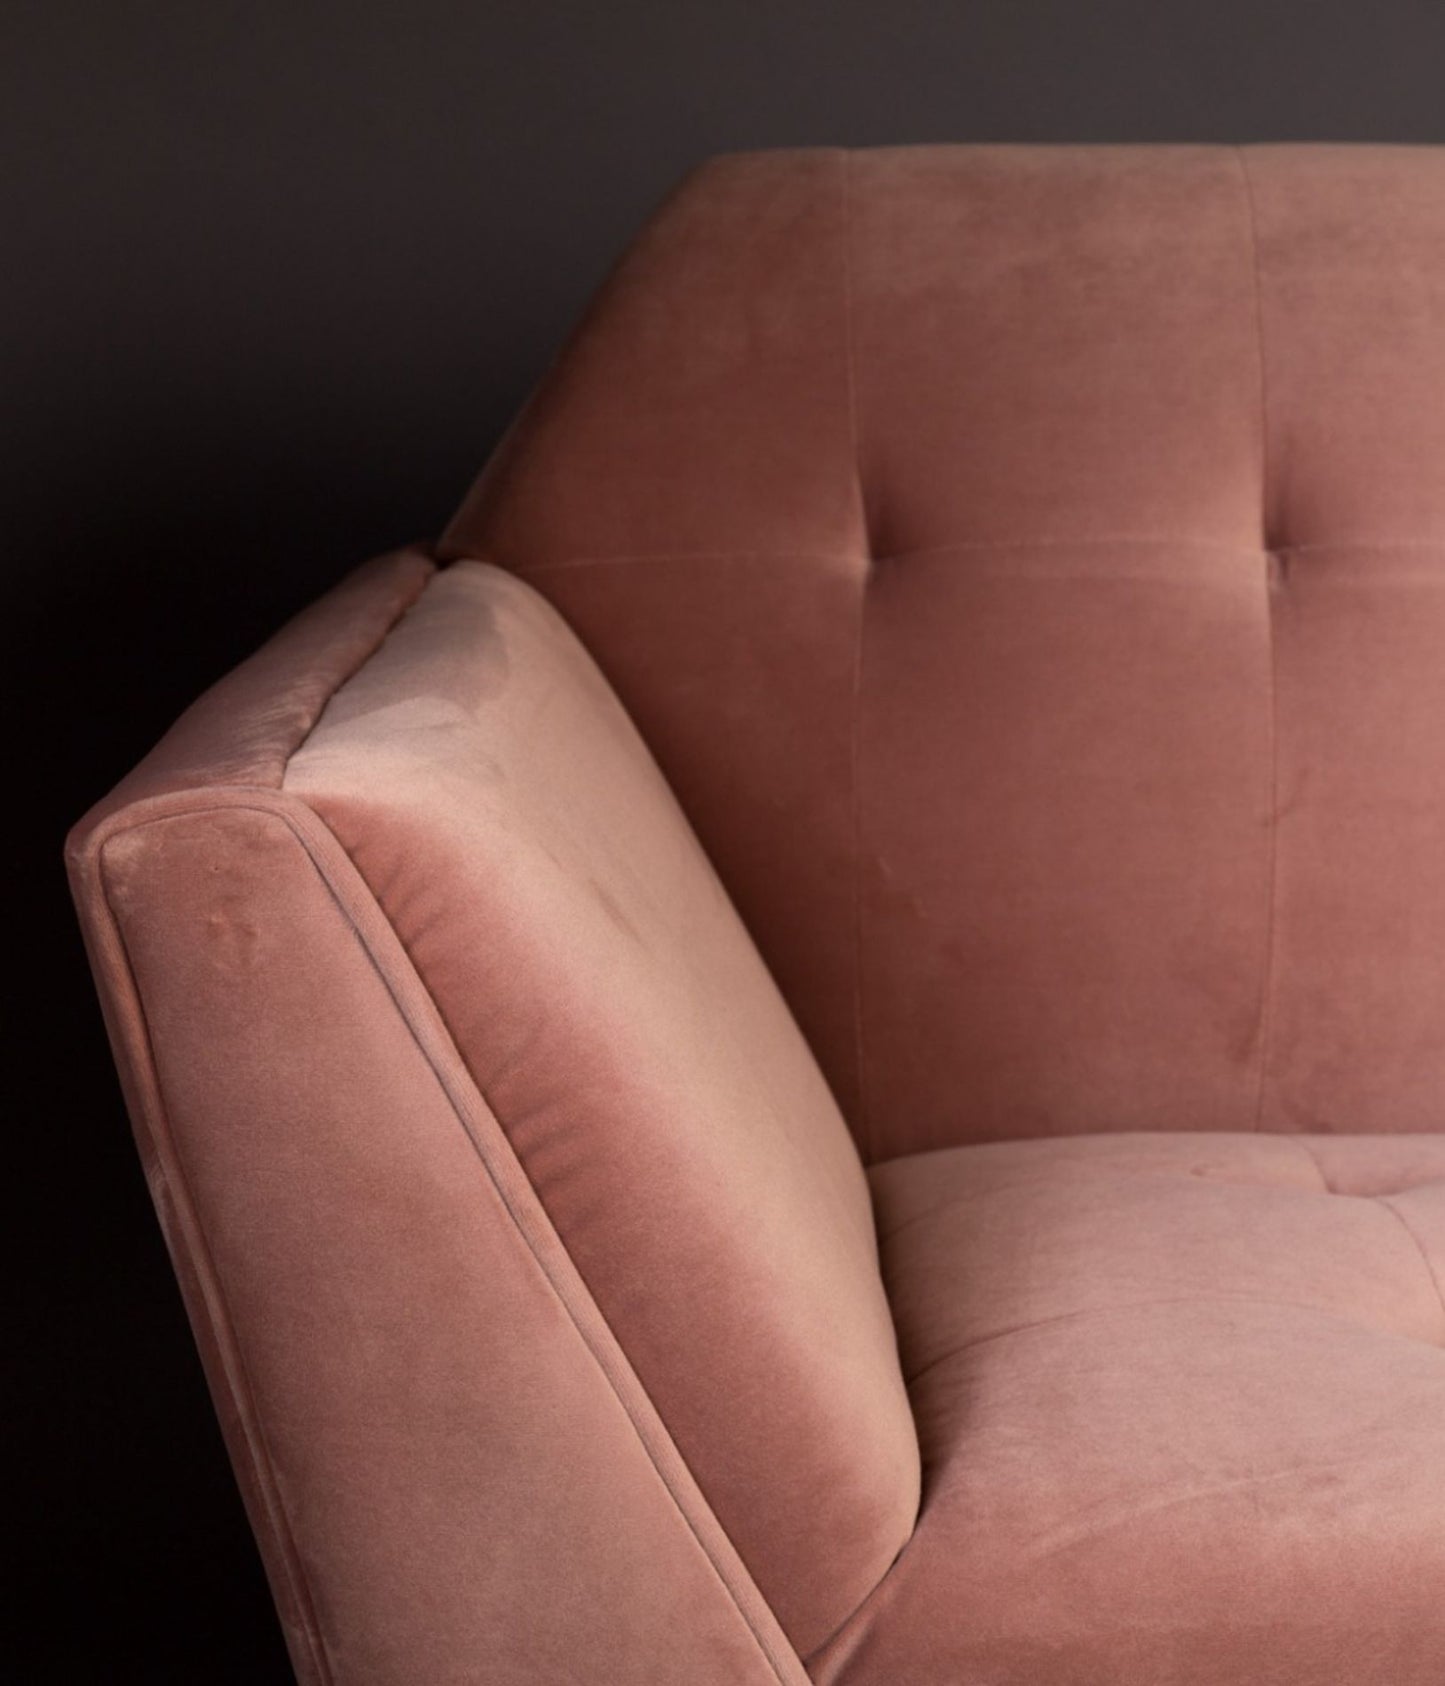 Dutchbone Kate fauteuil pink clay